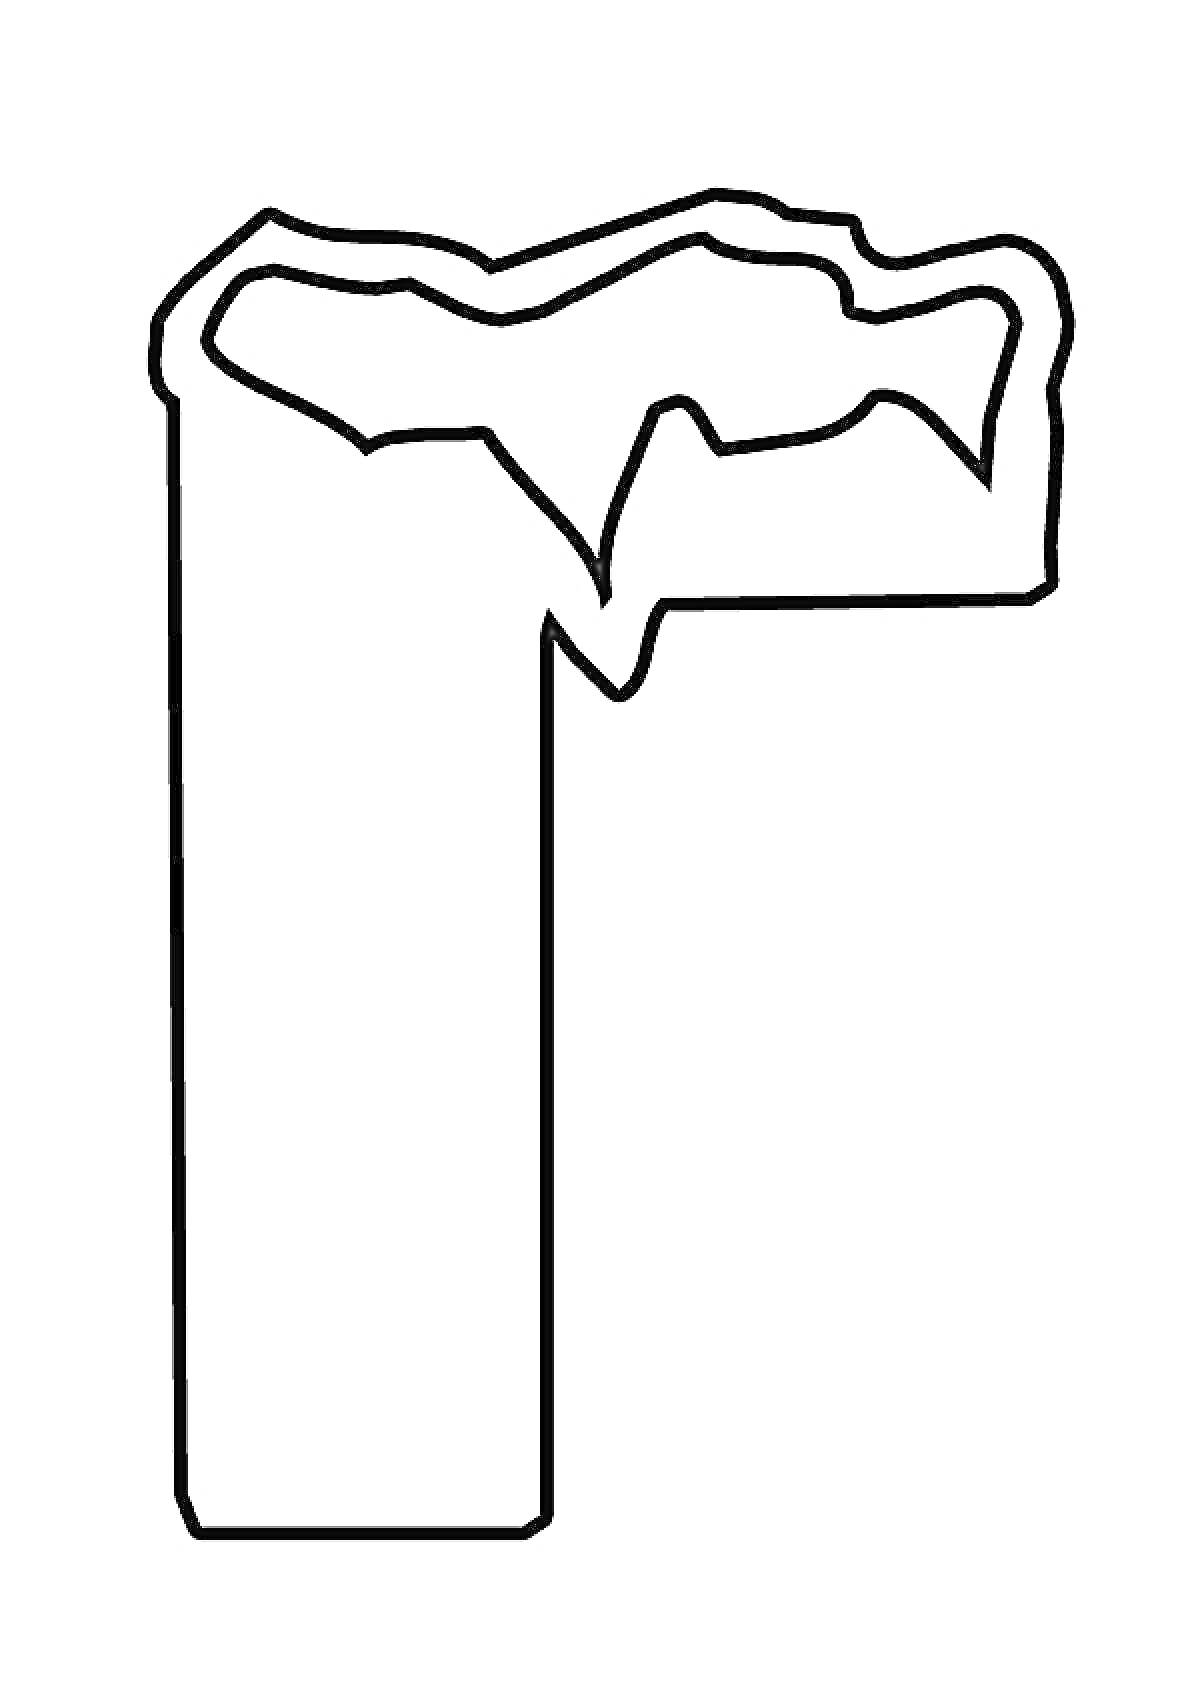 Раскраска Буква Г с контуром, напоминающим гору